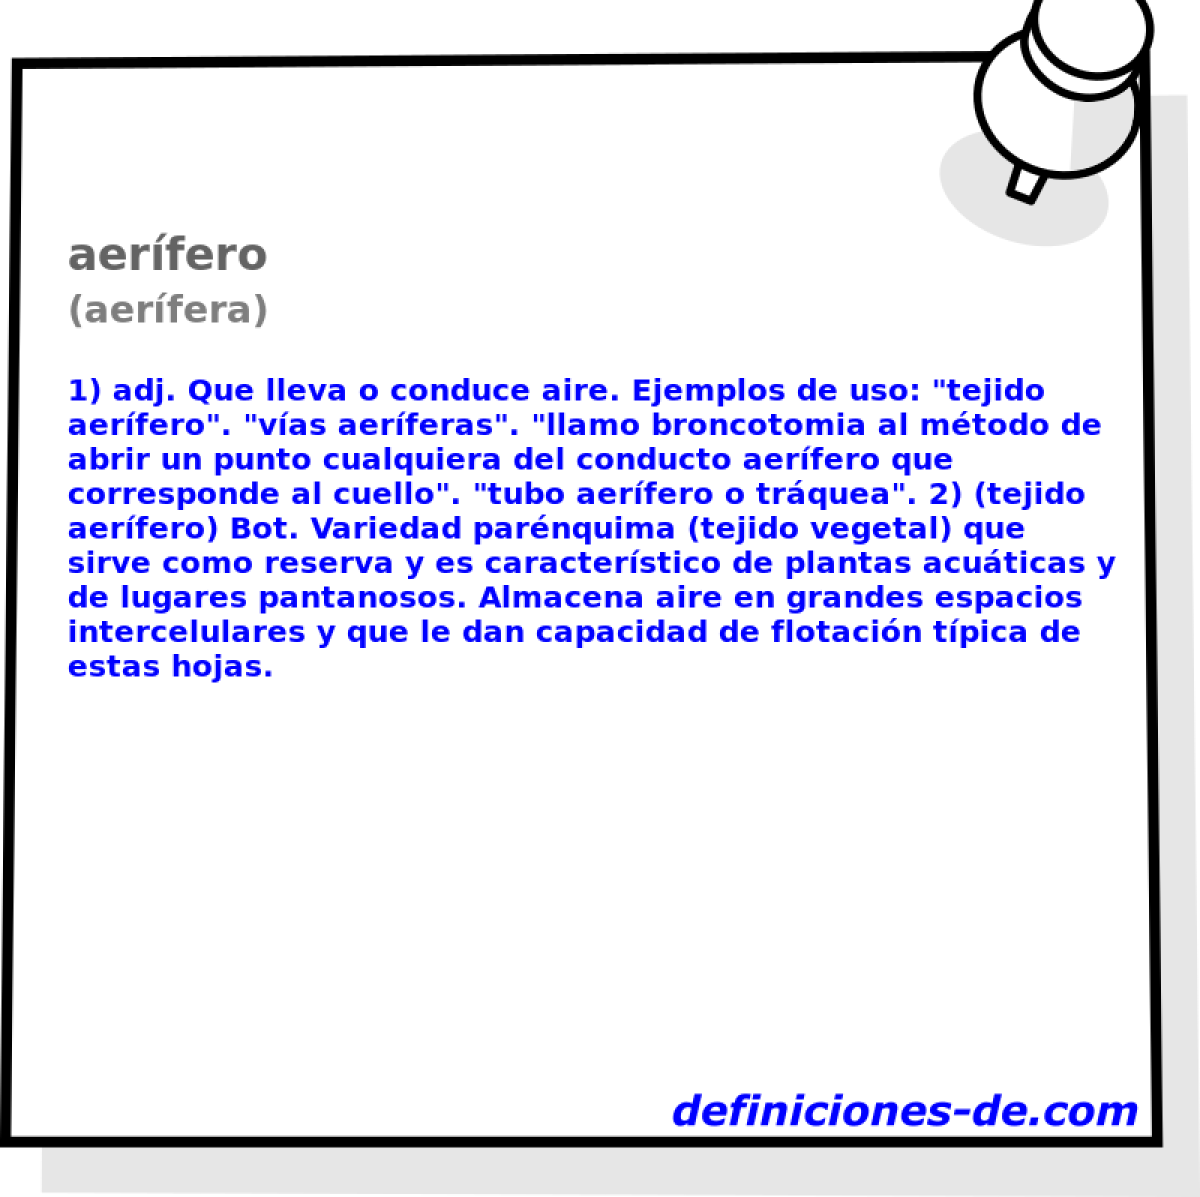 aerfero (aerfera)